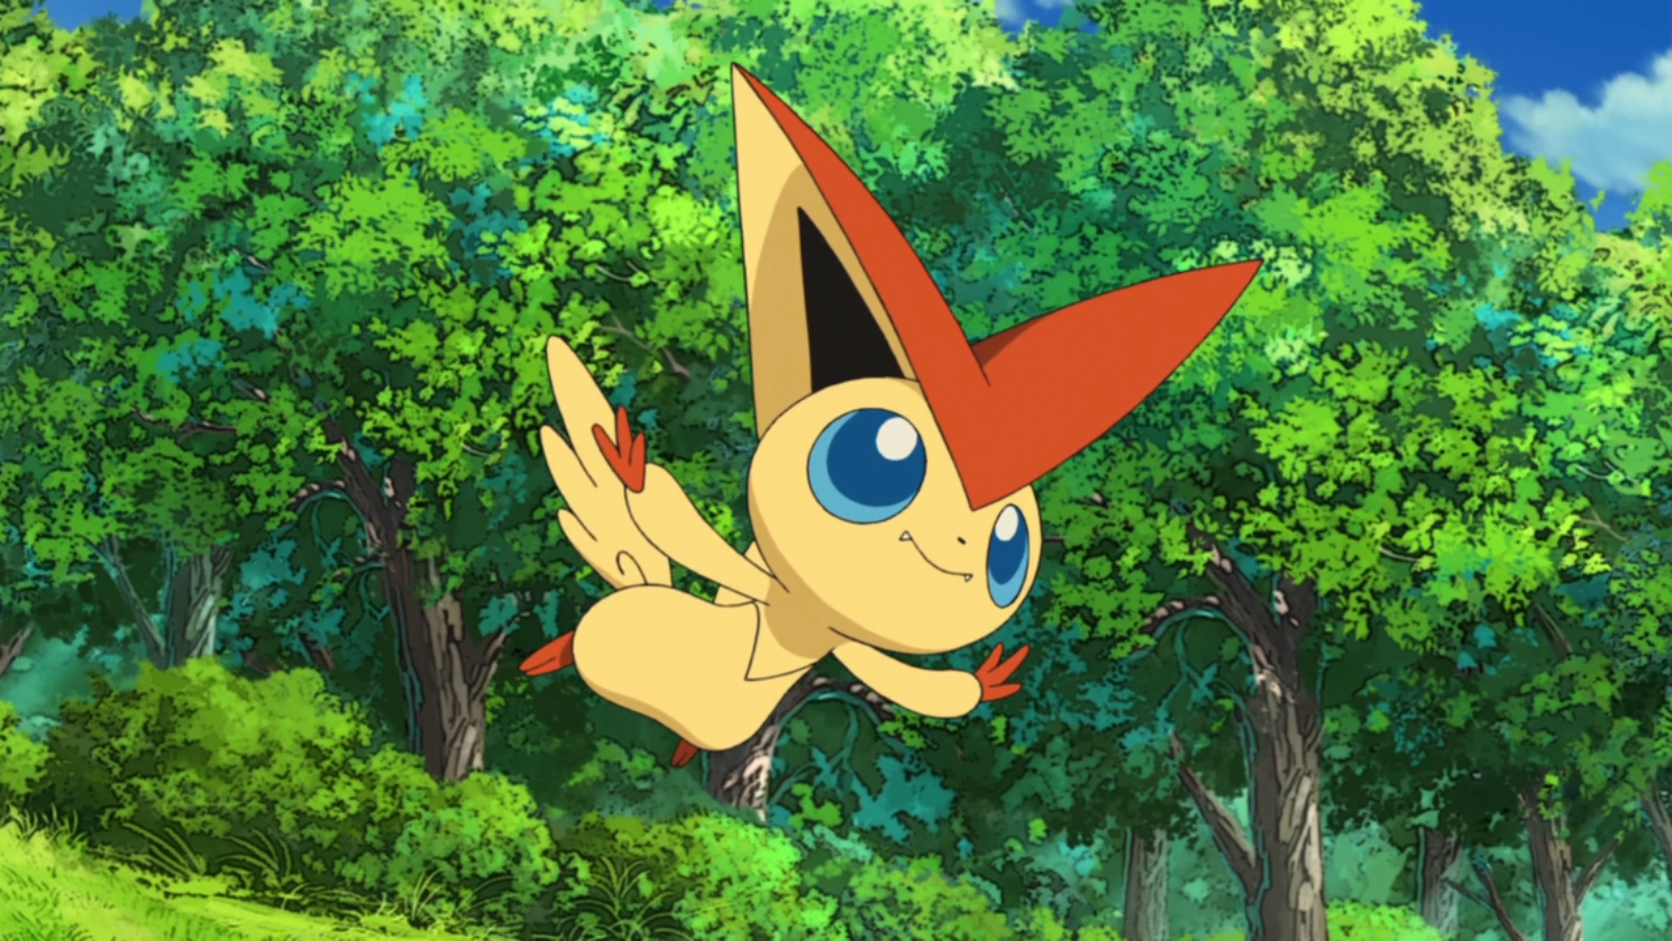 A screenshot of Victini from the Pokémon anime.